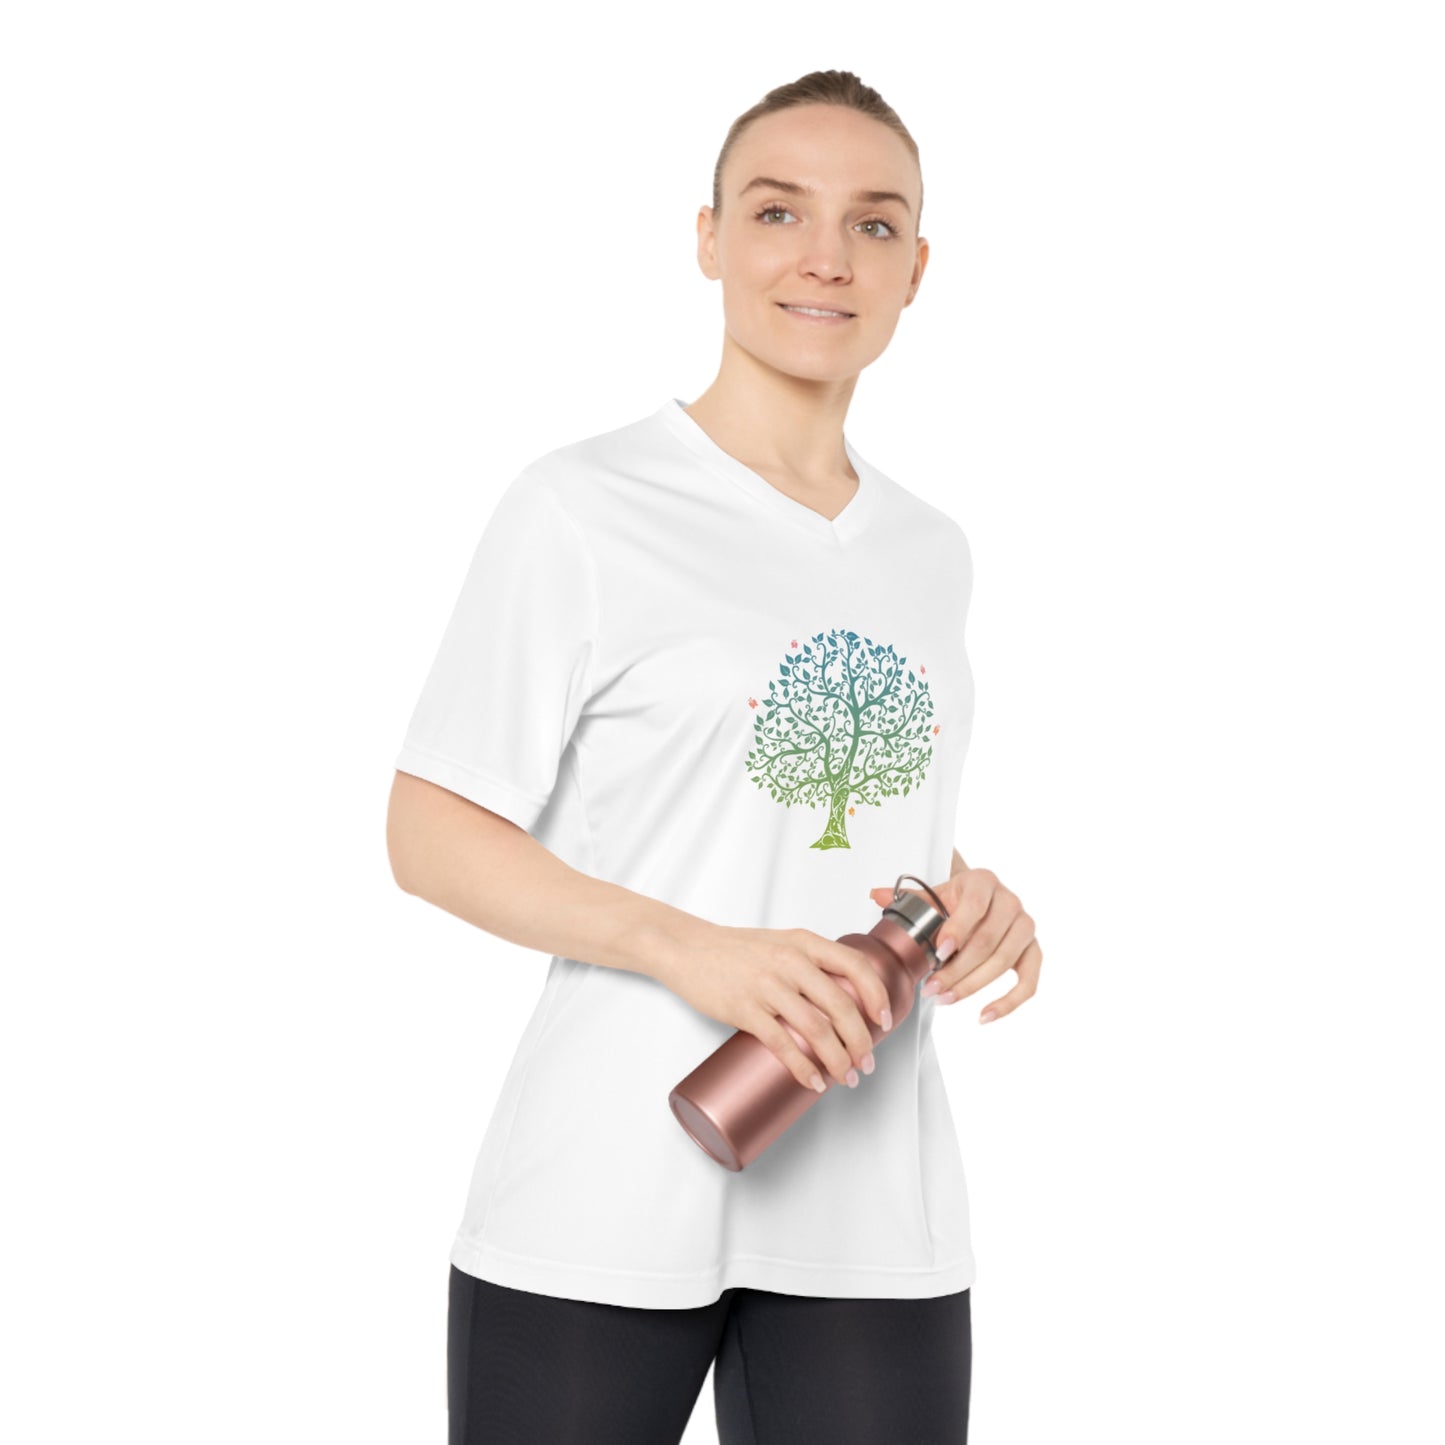 Tree of Life, Women's Performance V-Neck T-Shirt